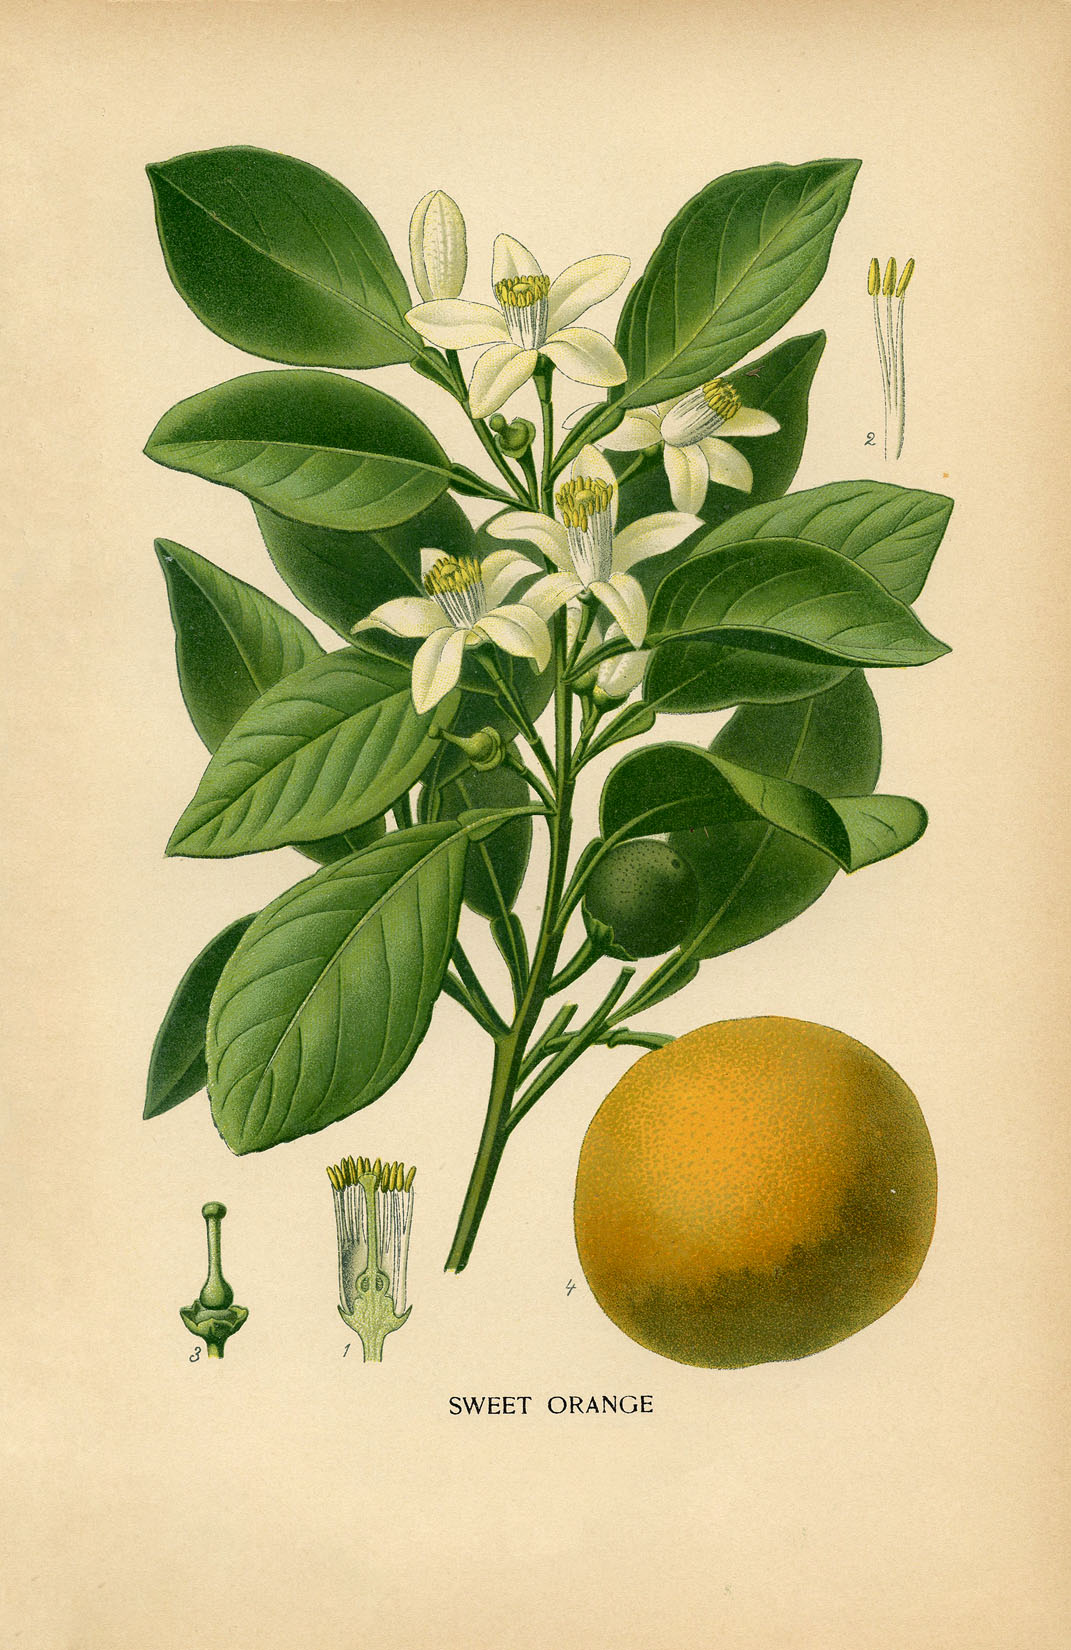 Vintage Botanical Print - Sweet Orange - The Graphics Fairy